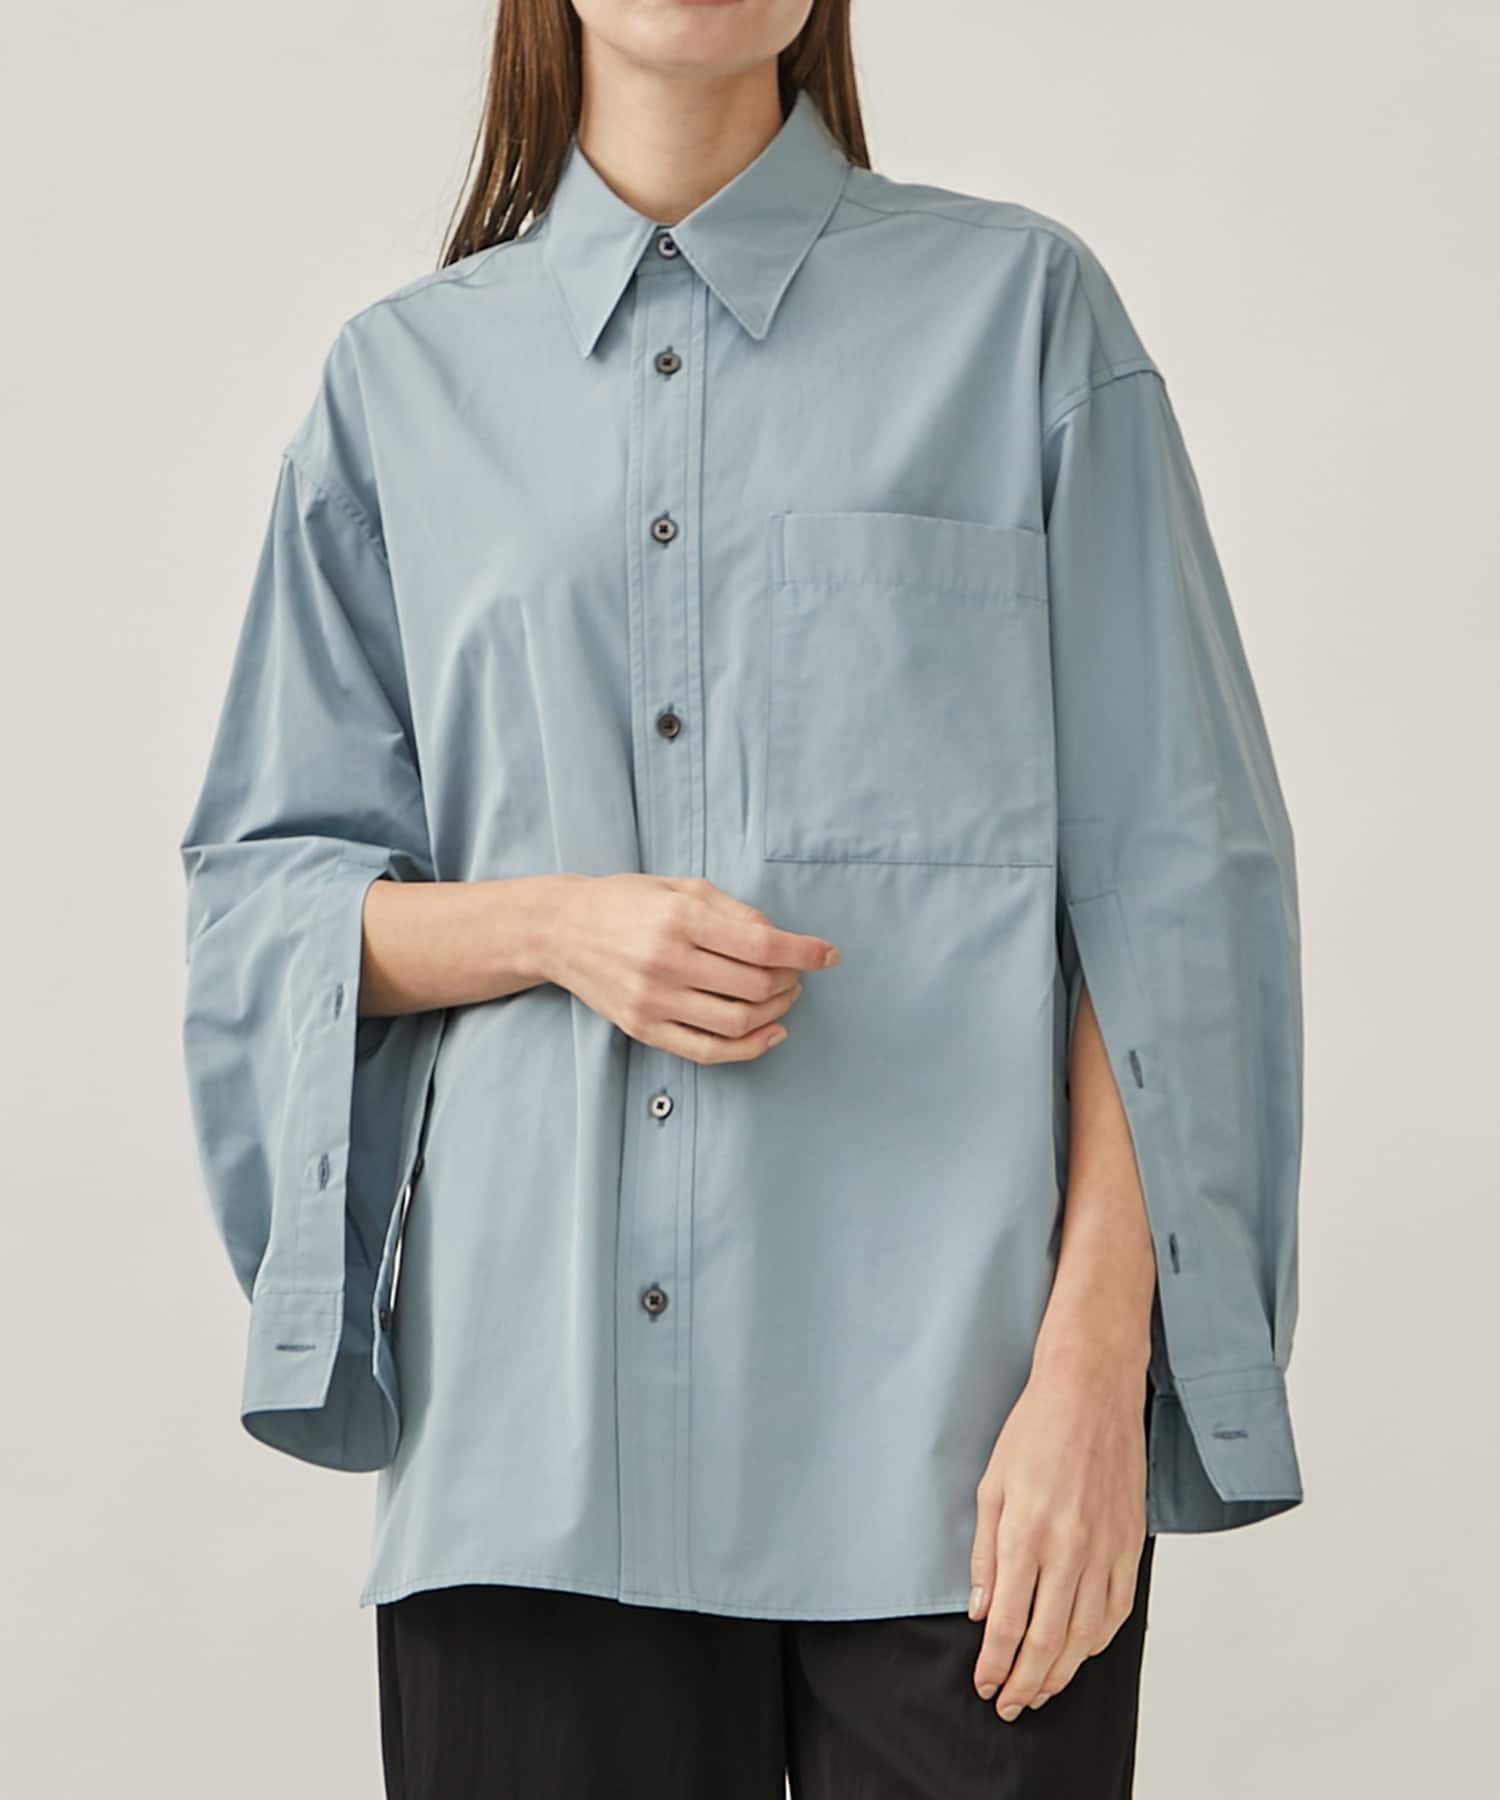 Cotton polyester taffeta over shirt